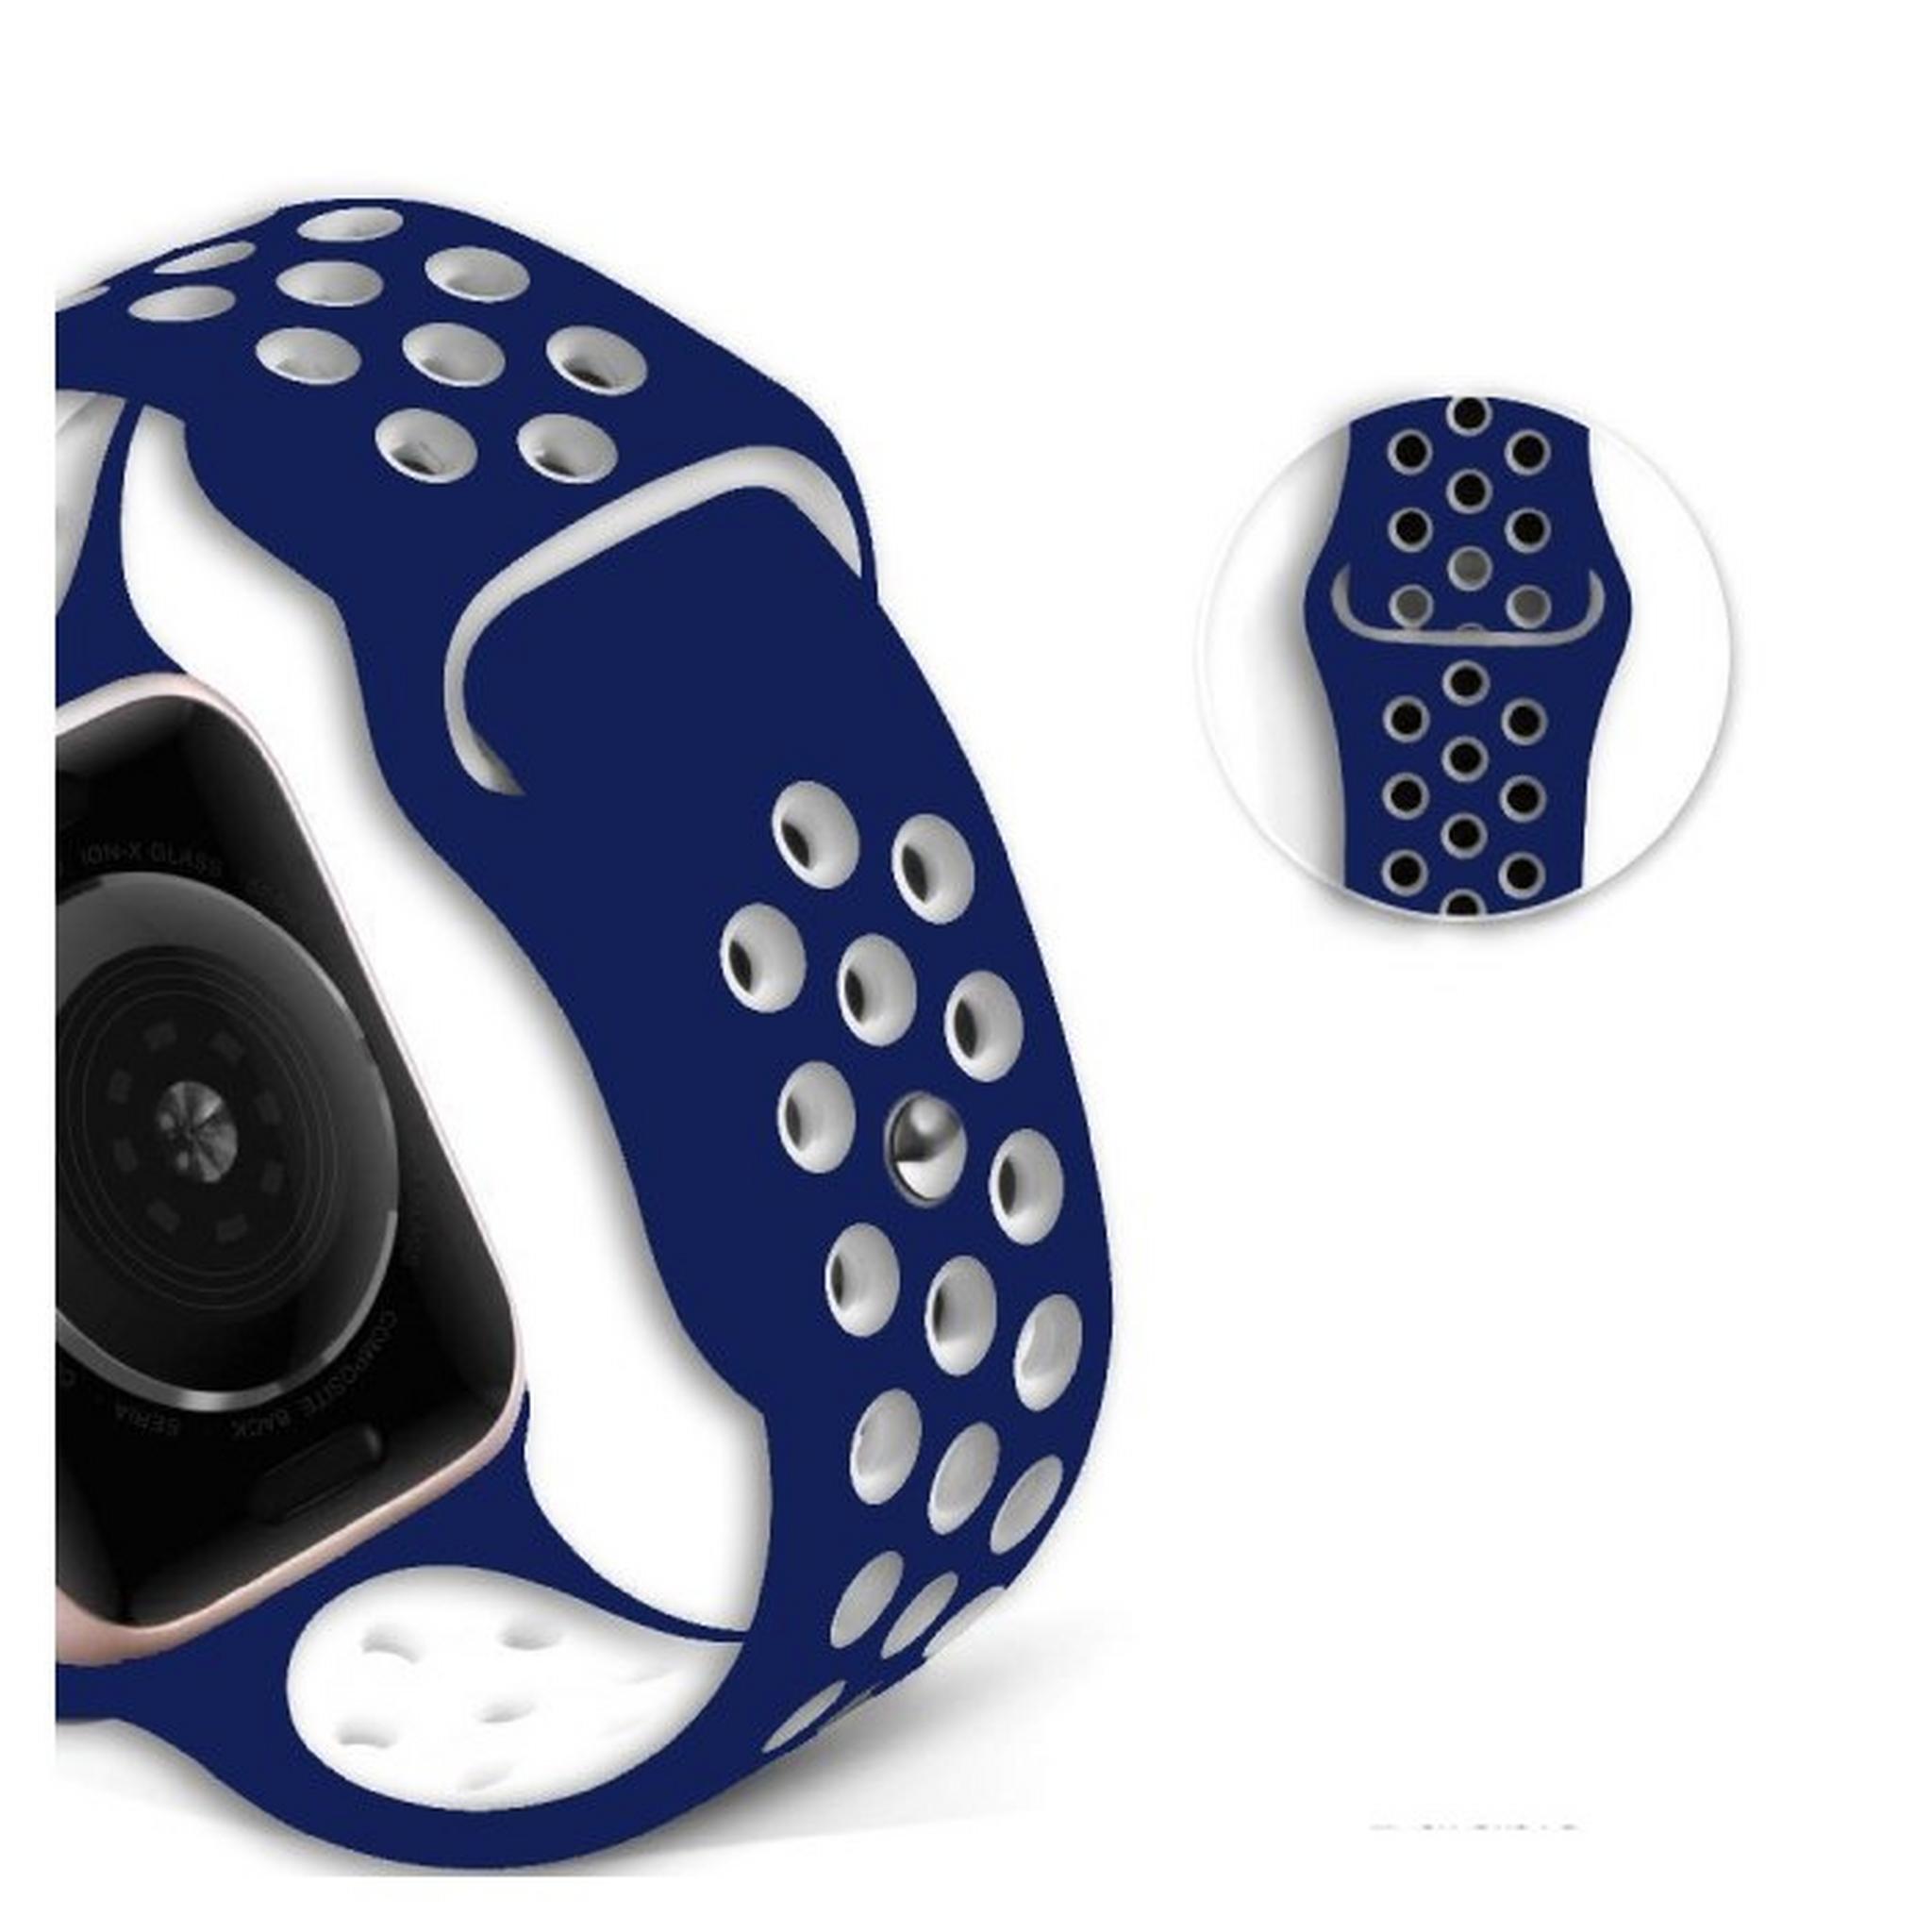 EQ 22mm Silicone Watch Band - Blue/White